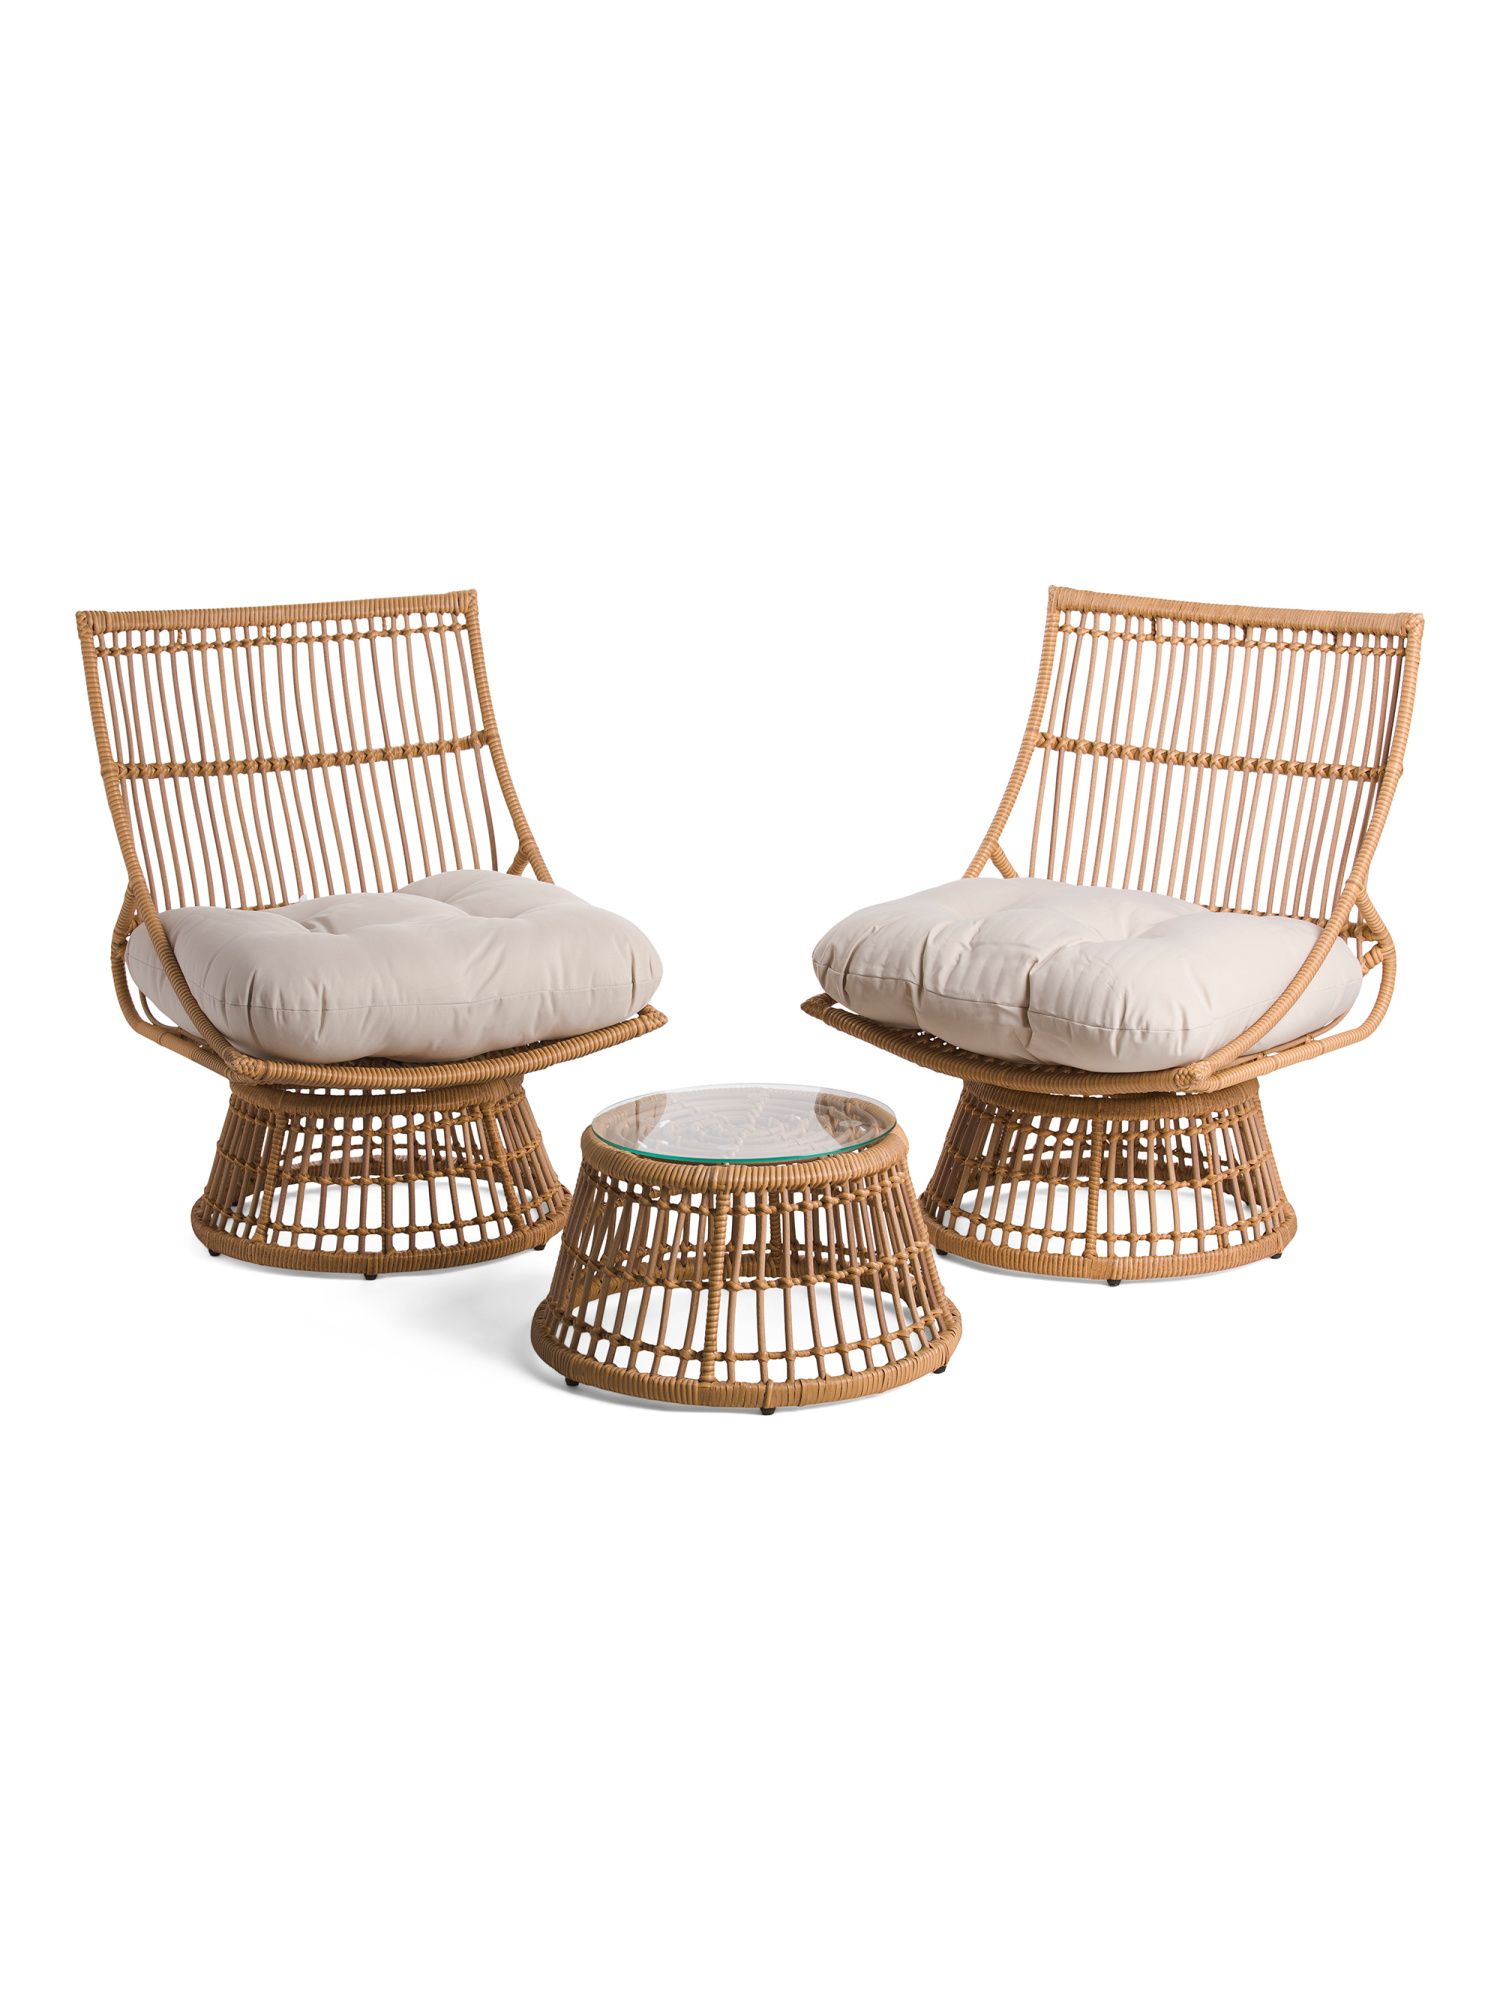 3pc Swivel Open Weaving Chair Set | The Global Decor Shop | Marshalls | Marshalls